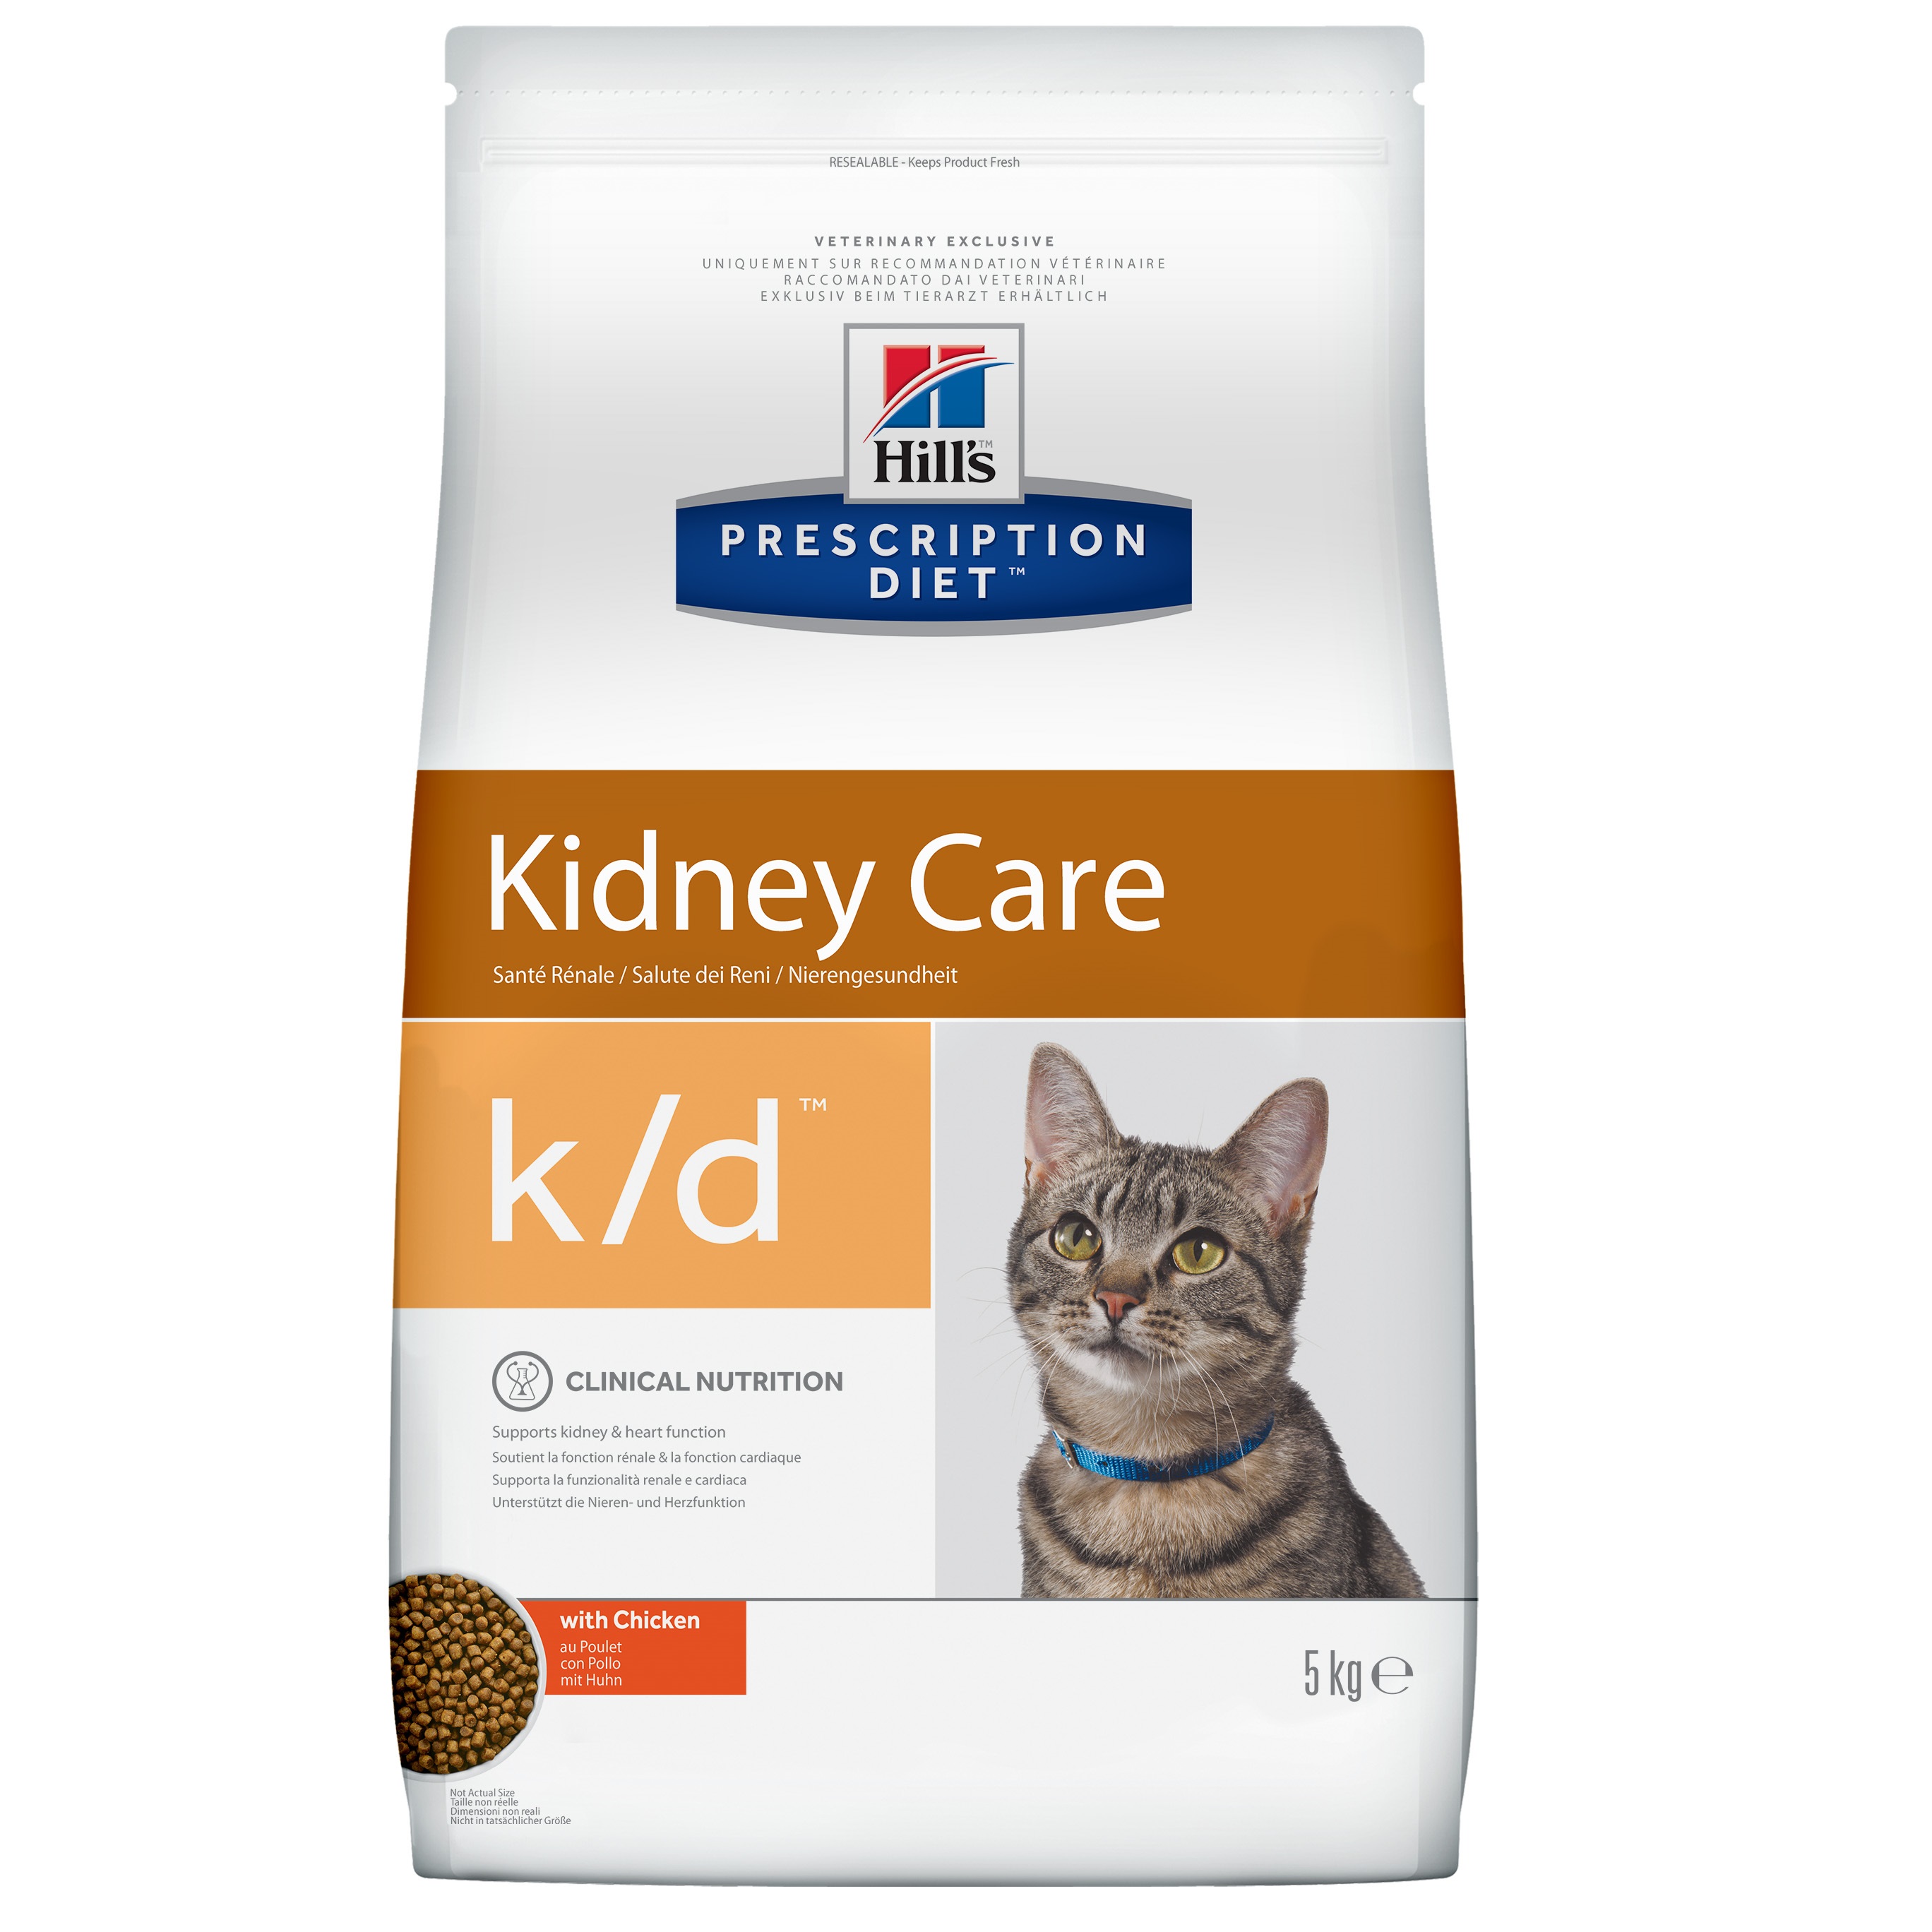 Hill's Prescription Diet k/d Kidney Care сухой корм для кошек, с курицей, 5кг